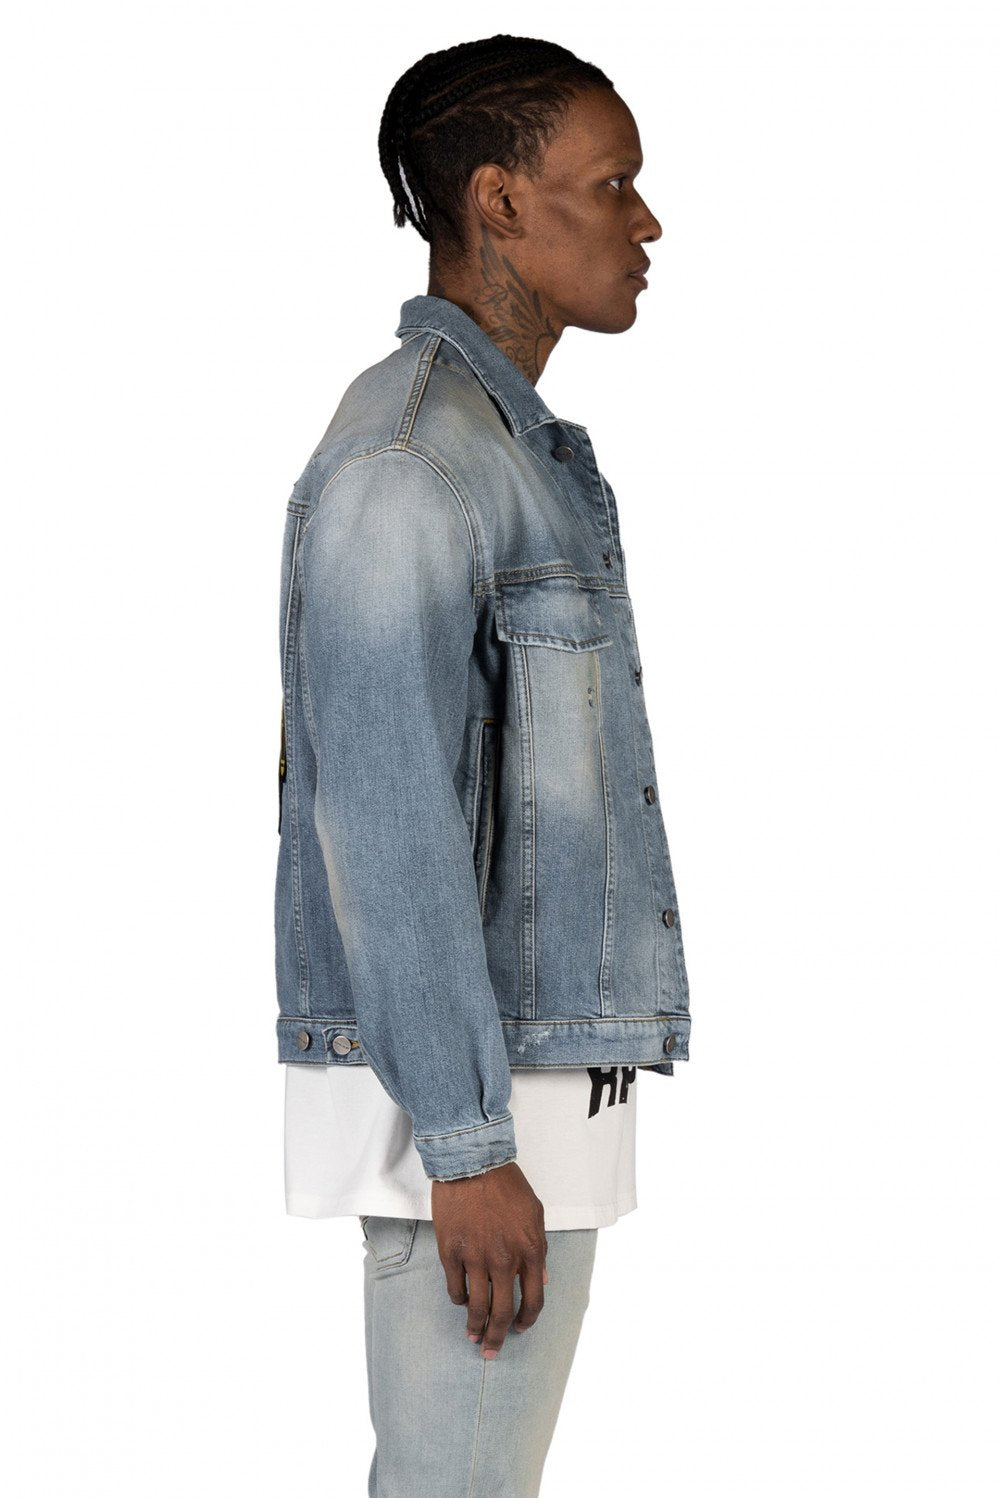 Acne Studios – Oversized Fit Denim Jacket Light Blue | Highsnobiety Shop